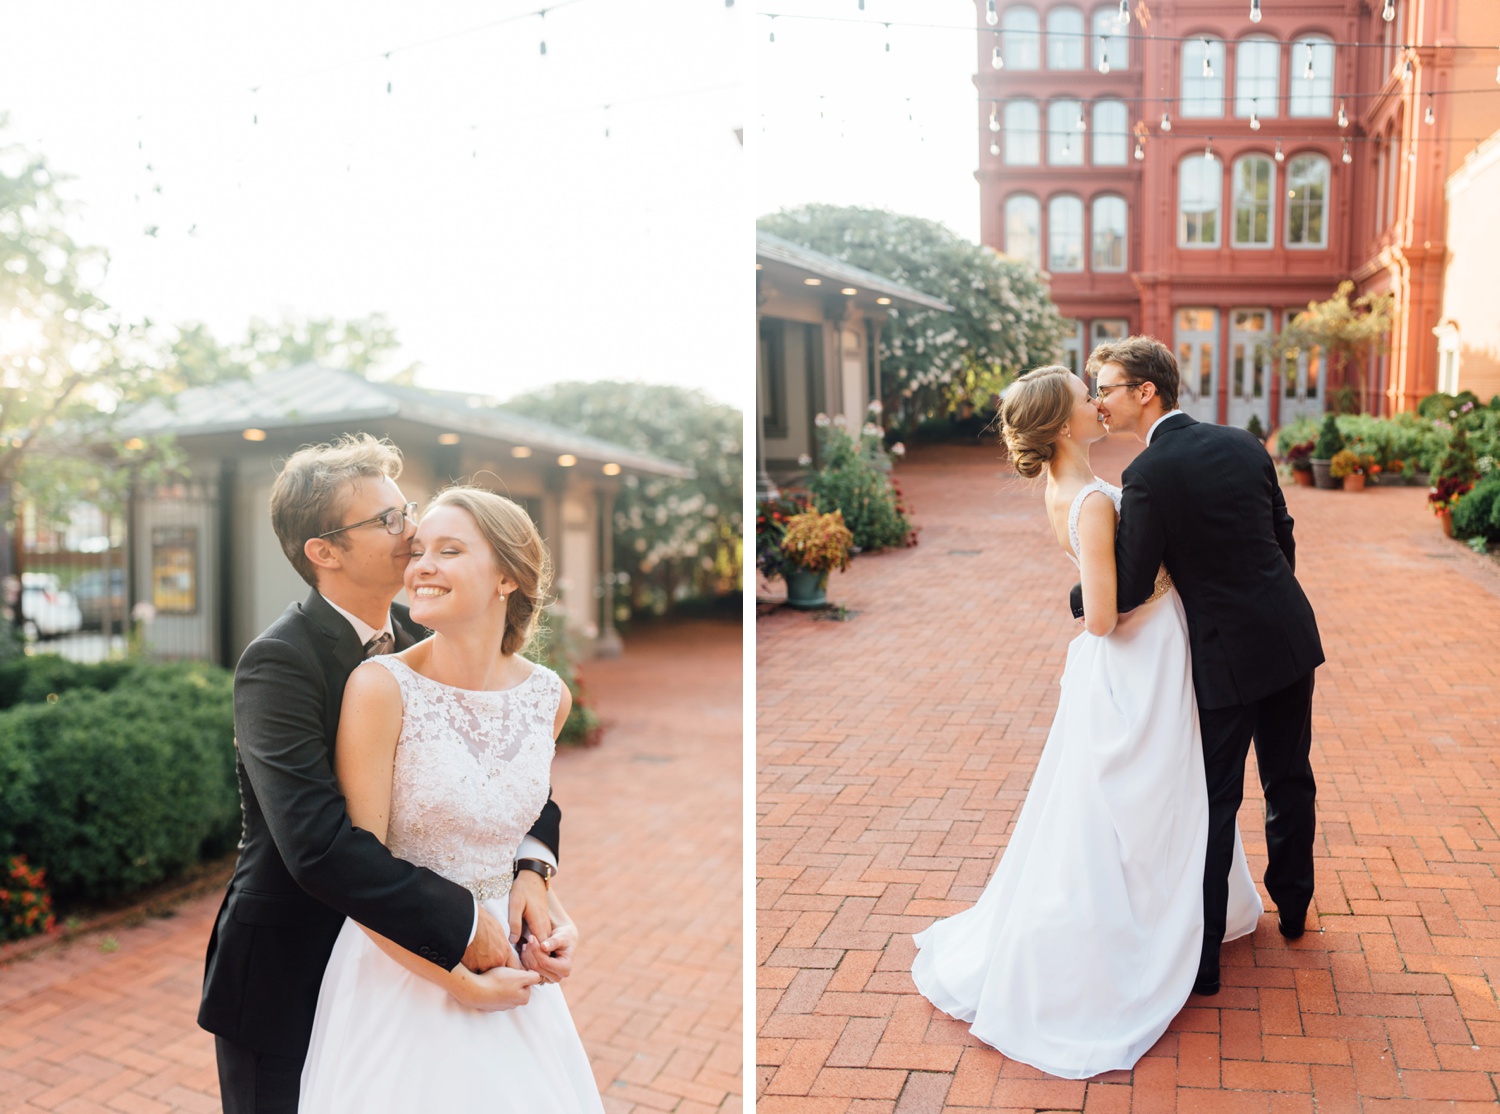 Hannah + Scott - 1840's Plaza Wedding - Baltimore Wedding Photographer - Alison Dunn Photography photo